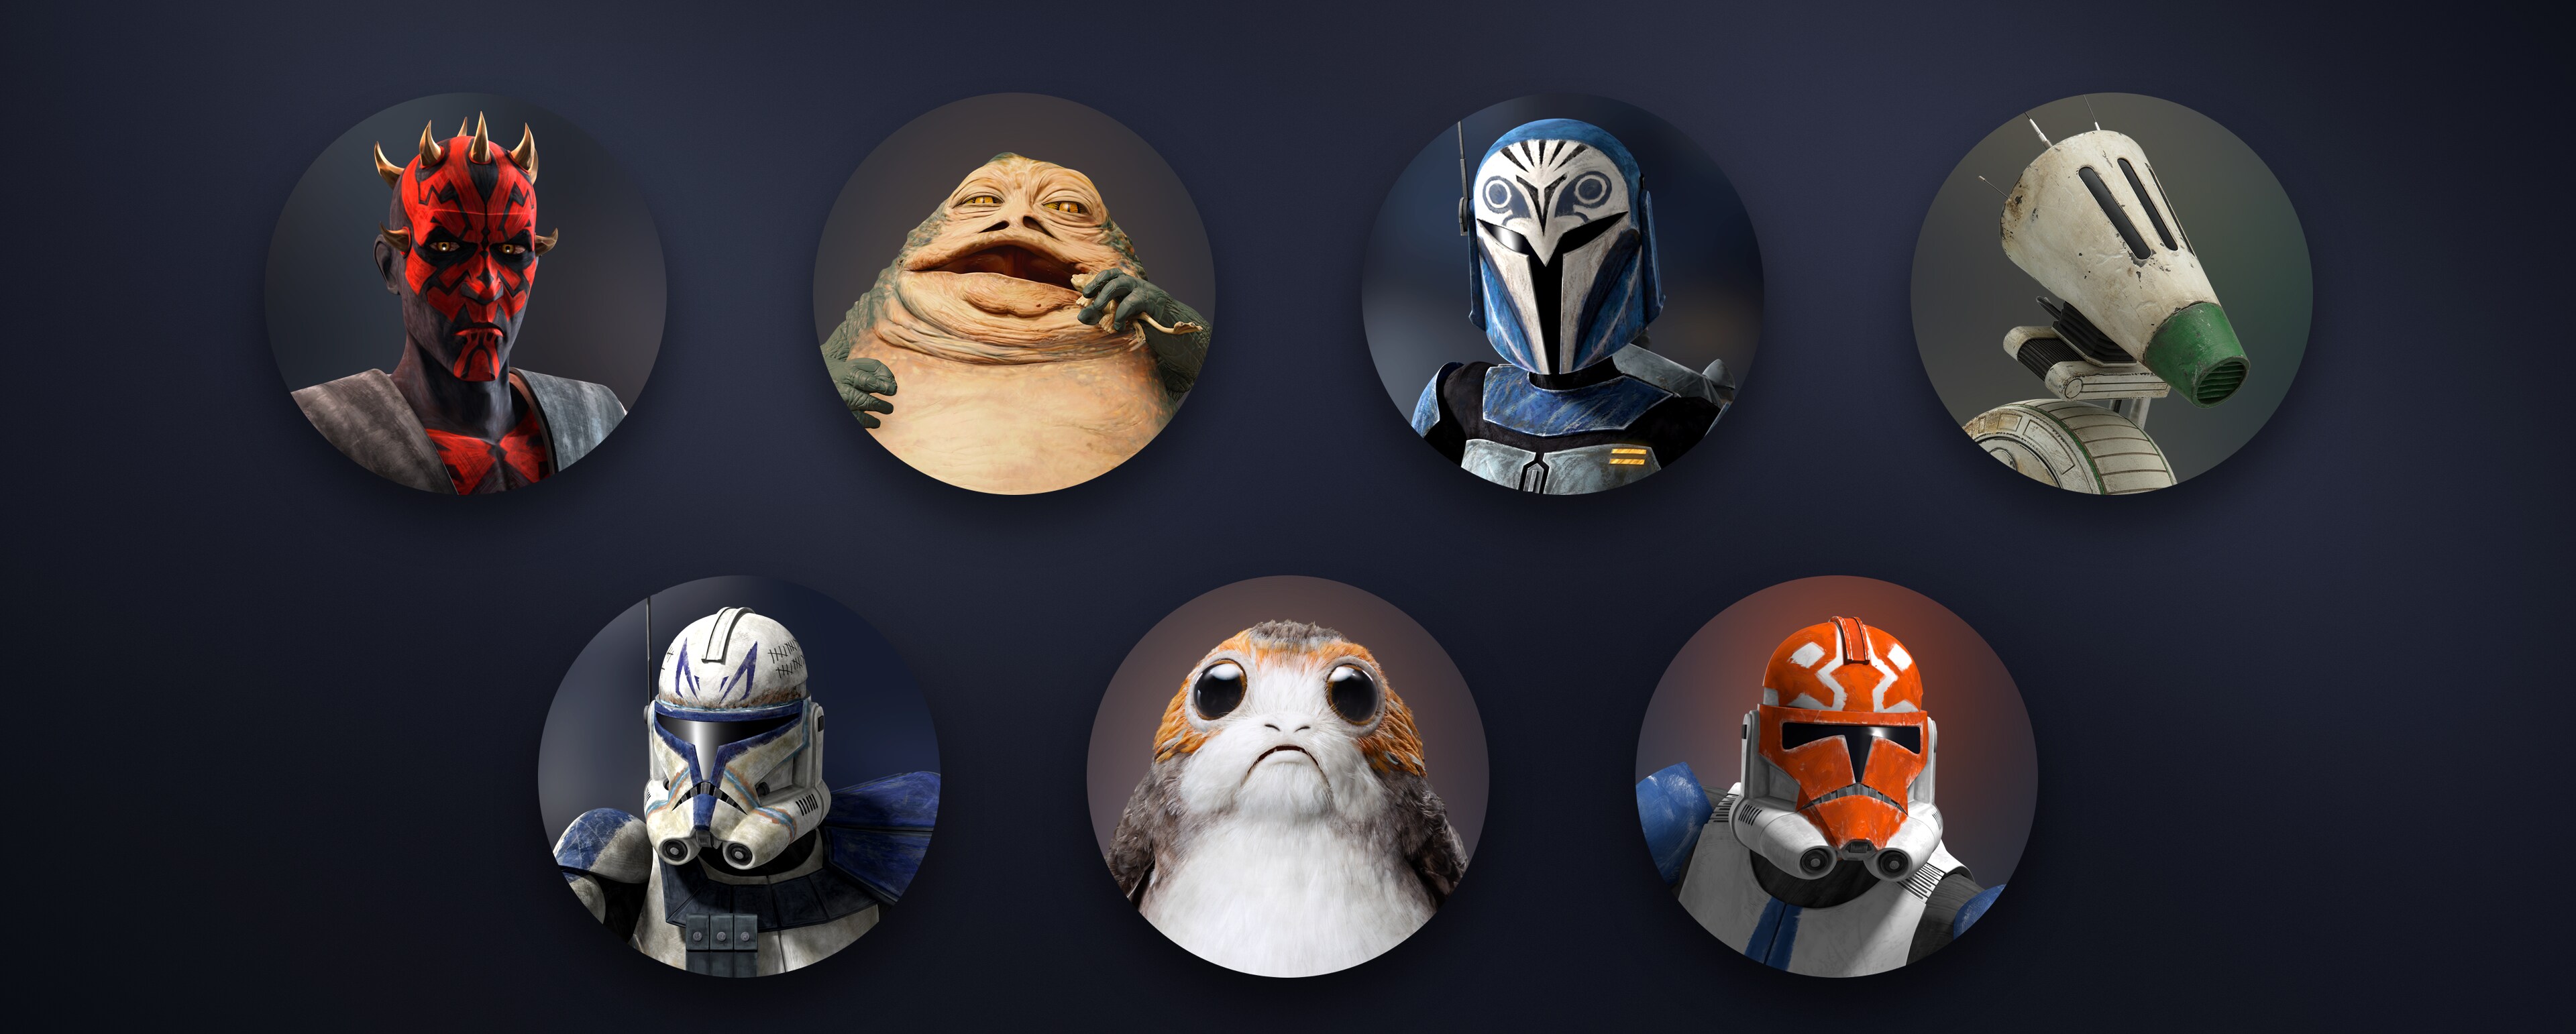 New Star Wars Avatars Available on Disney+ | News